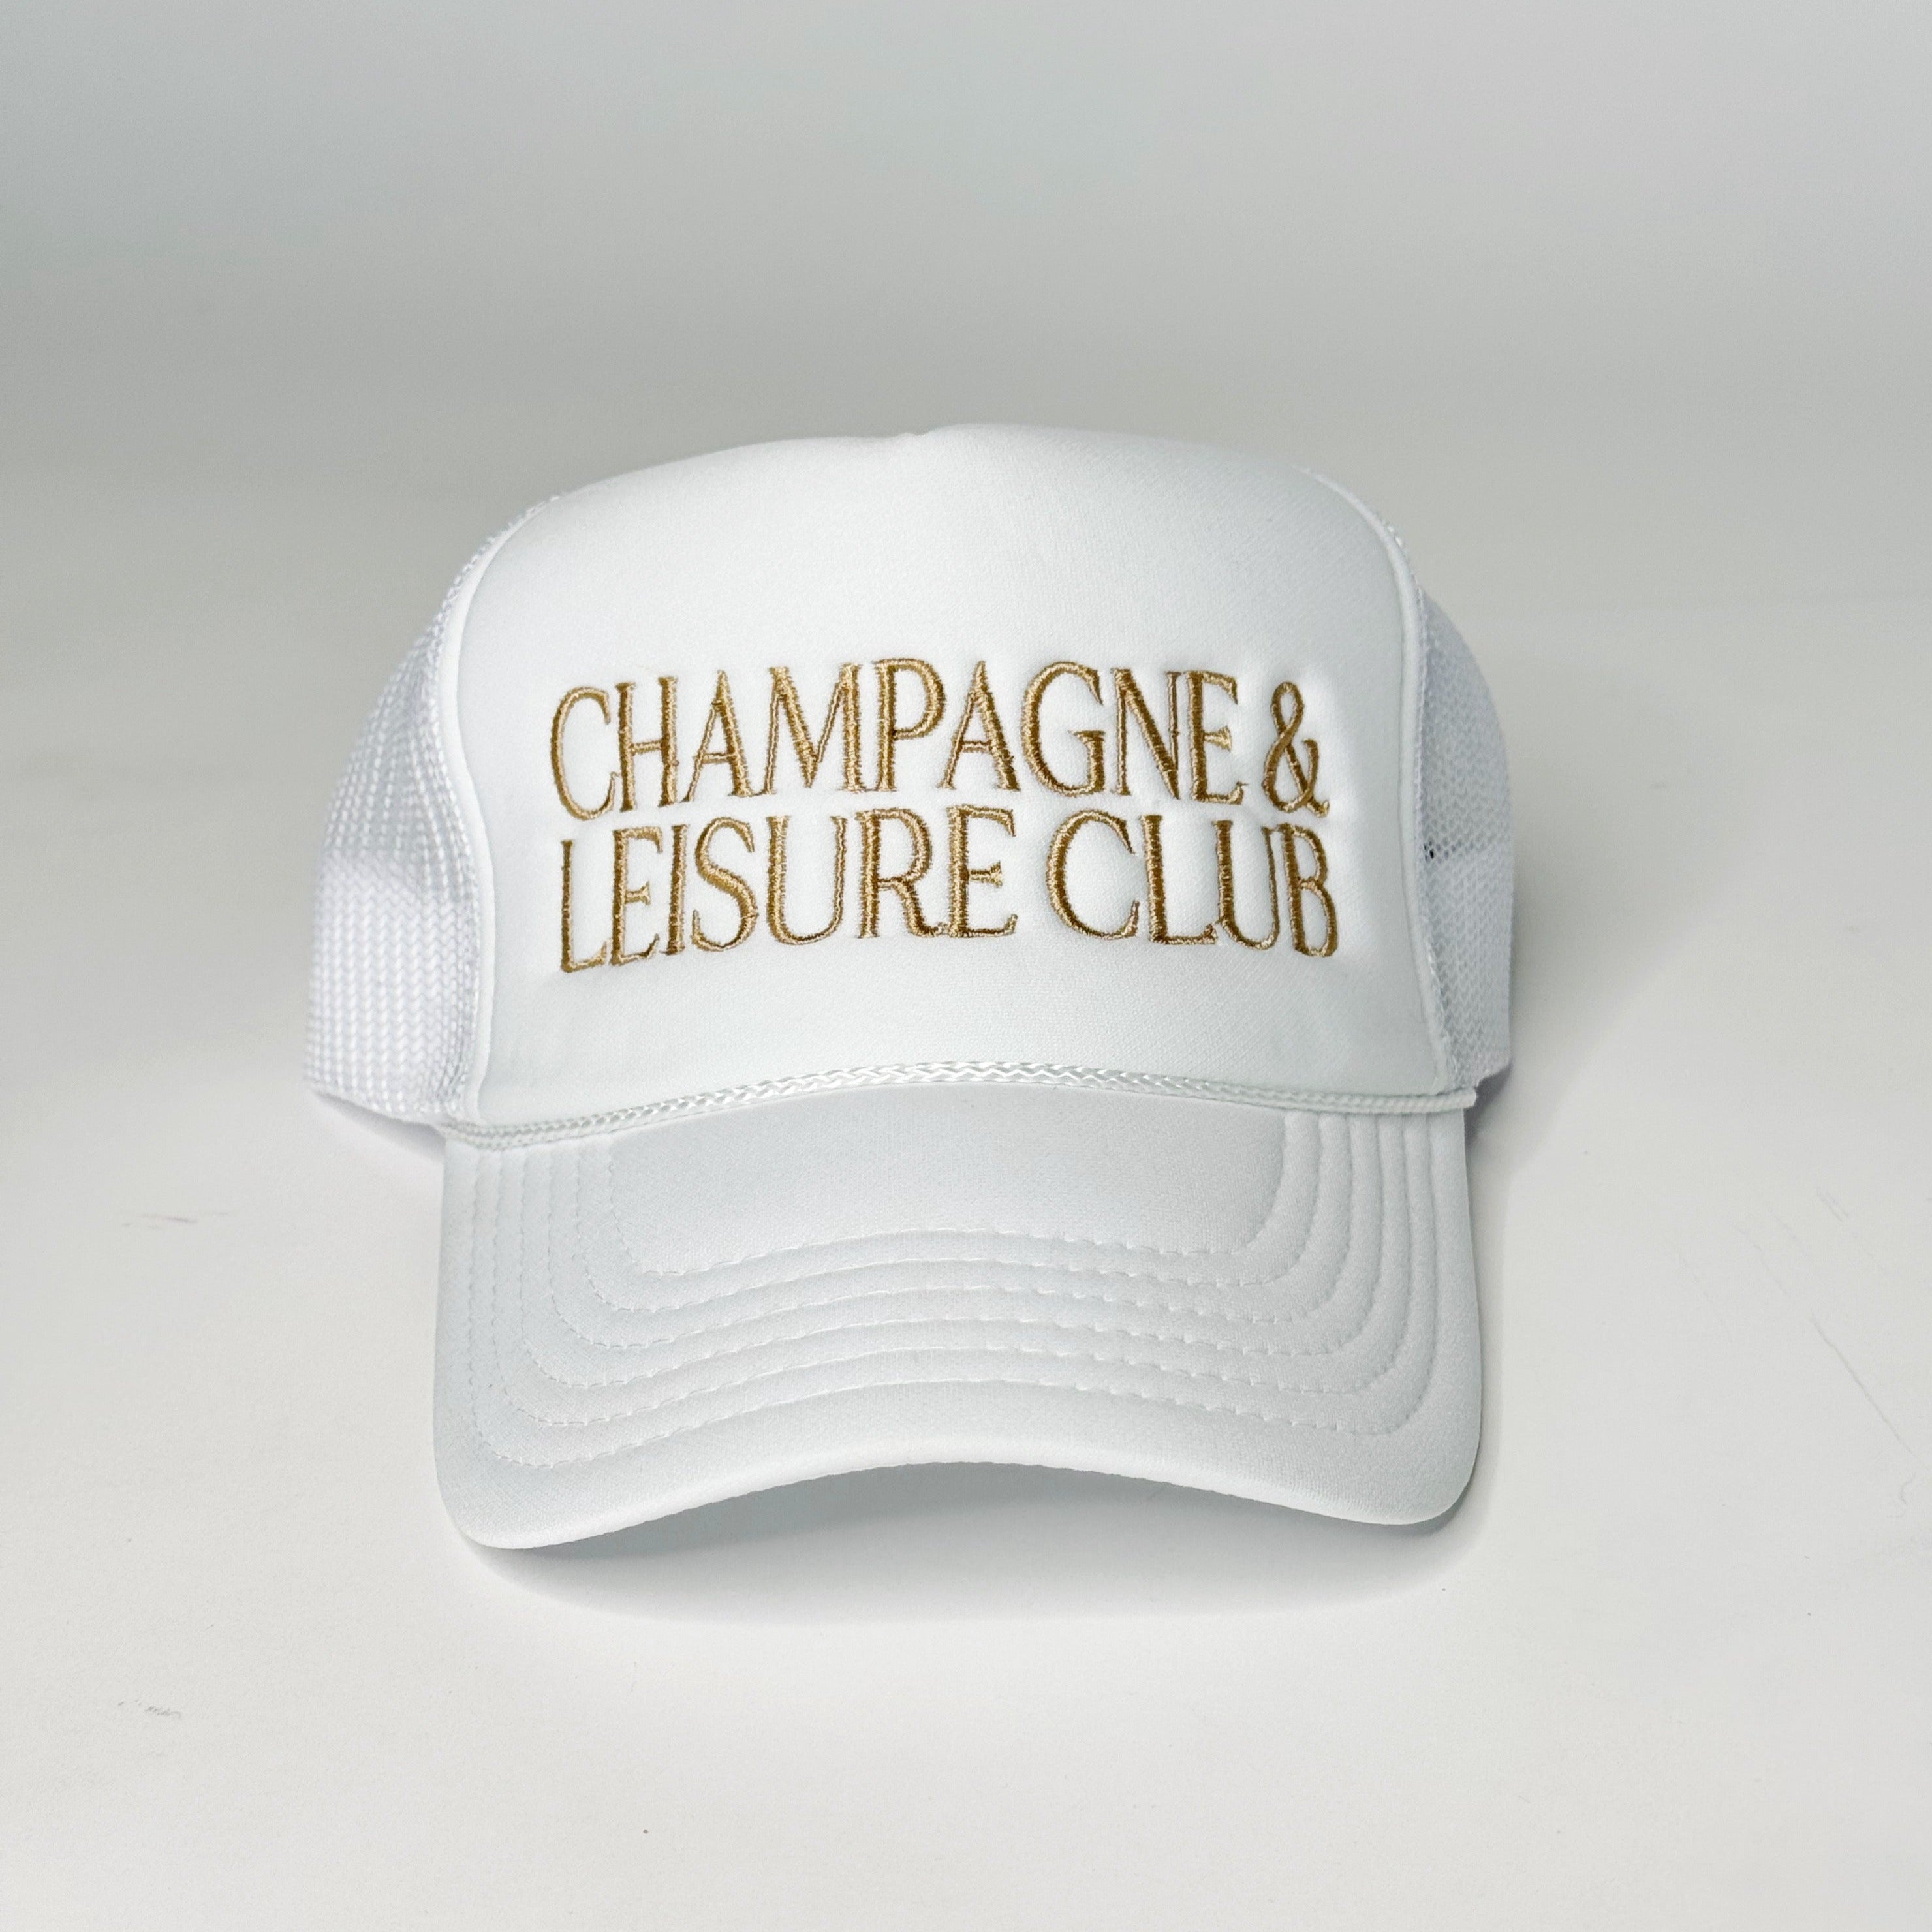 Champagne & Leisure Club Trucker Hats